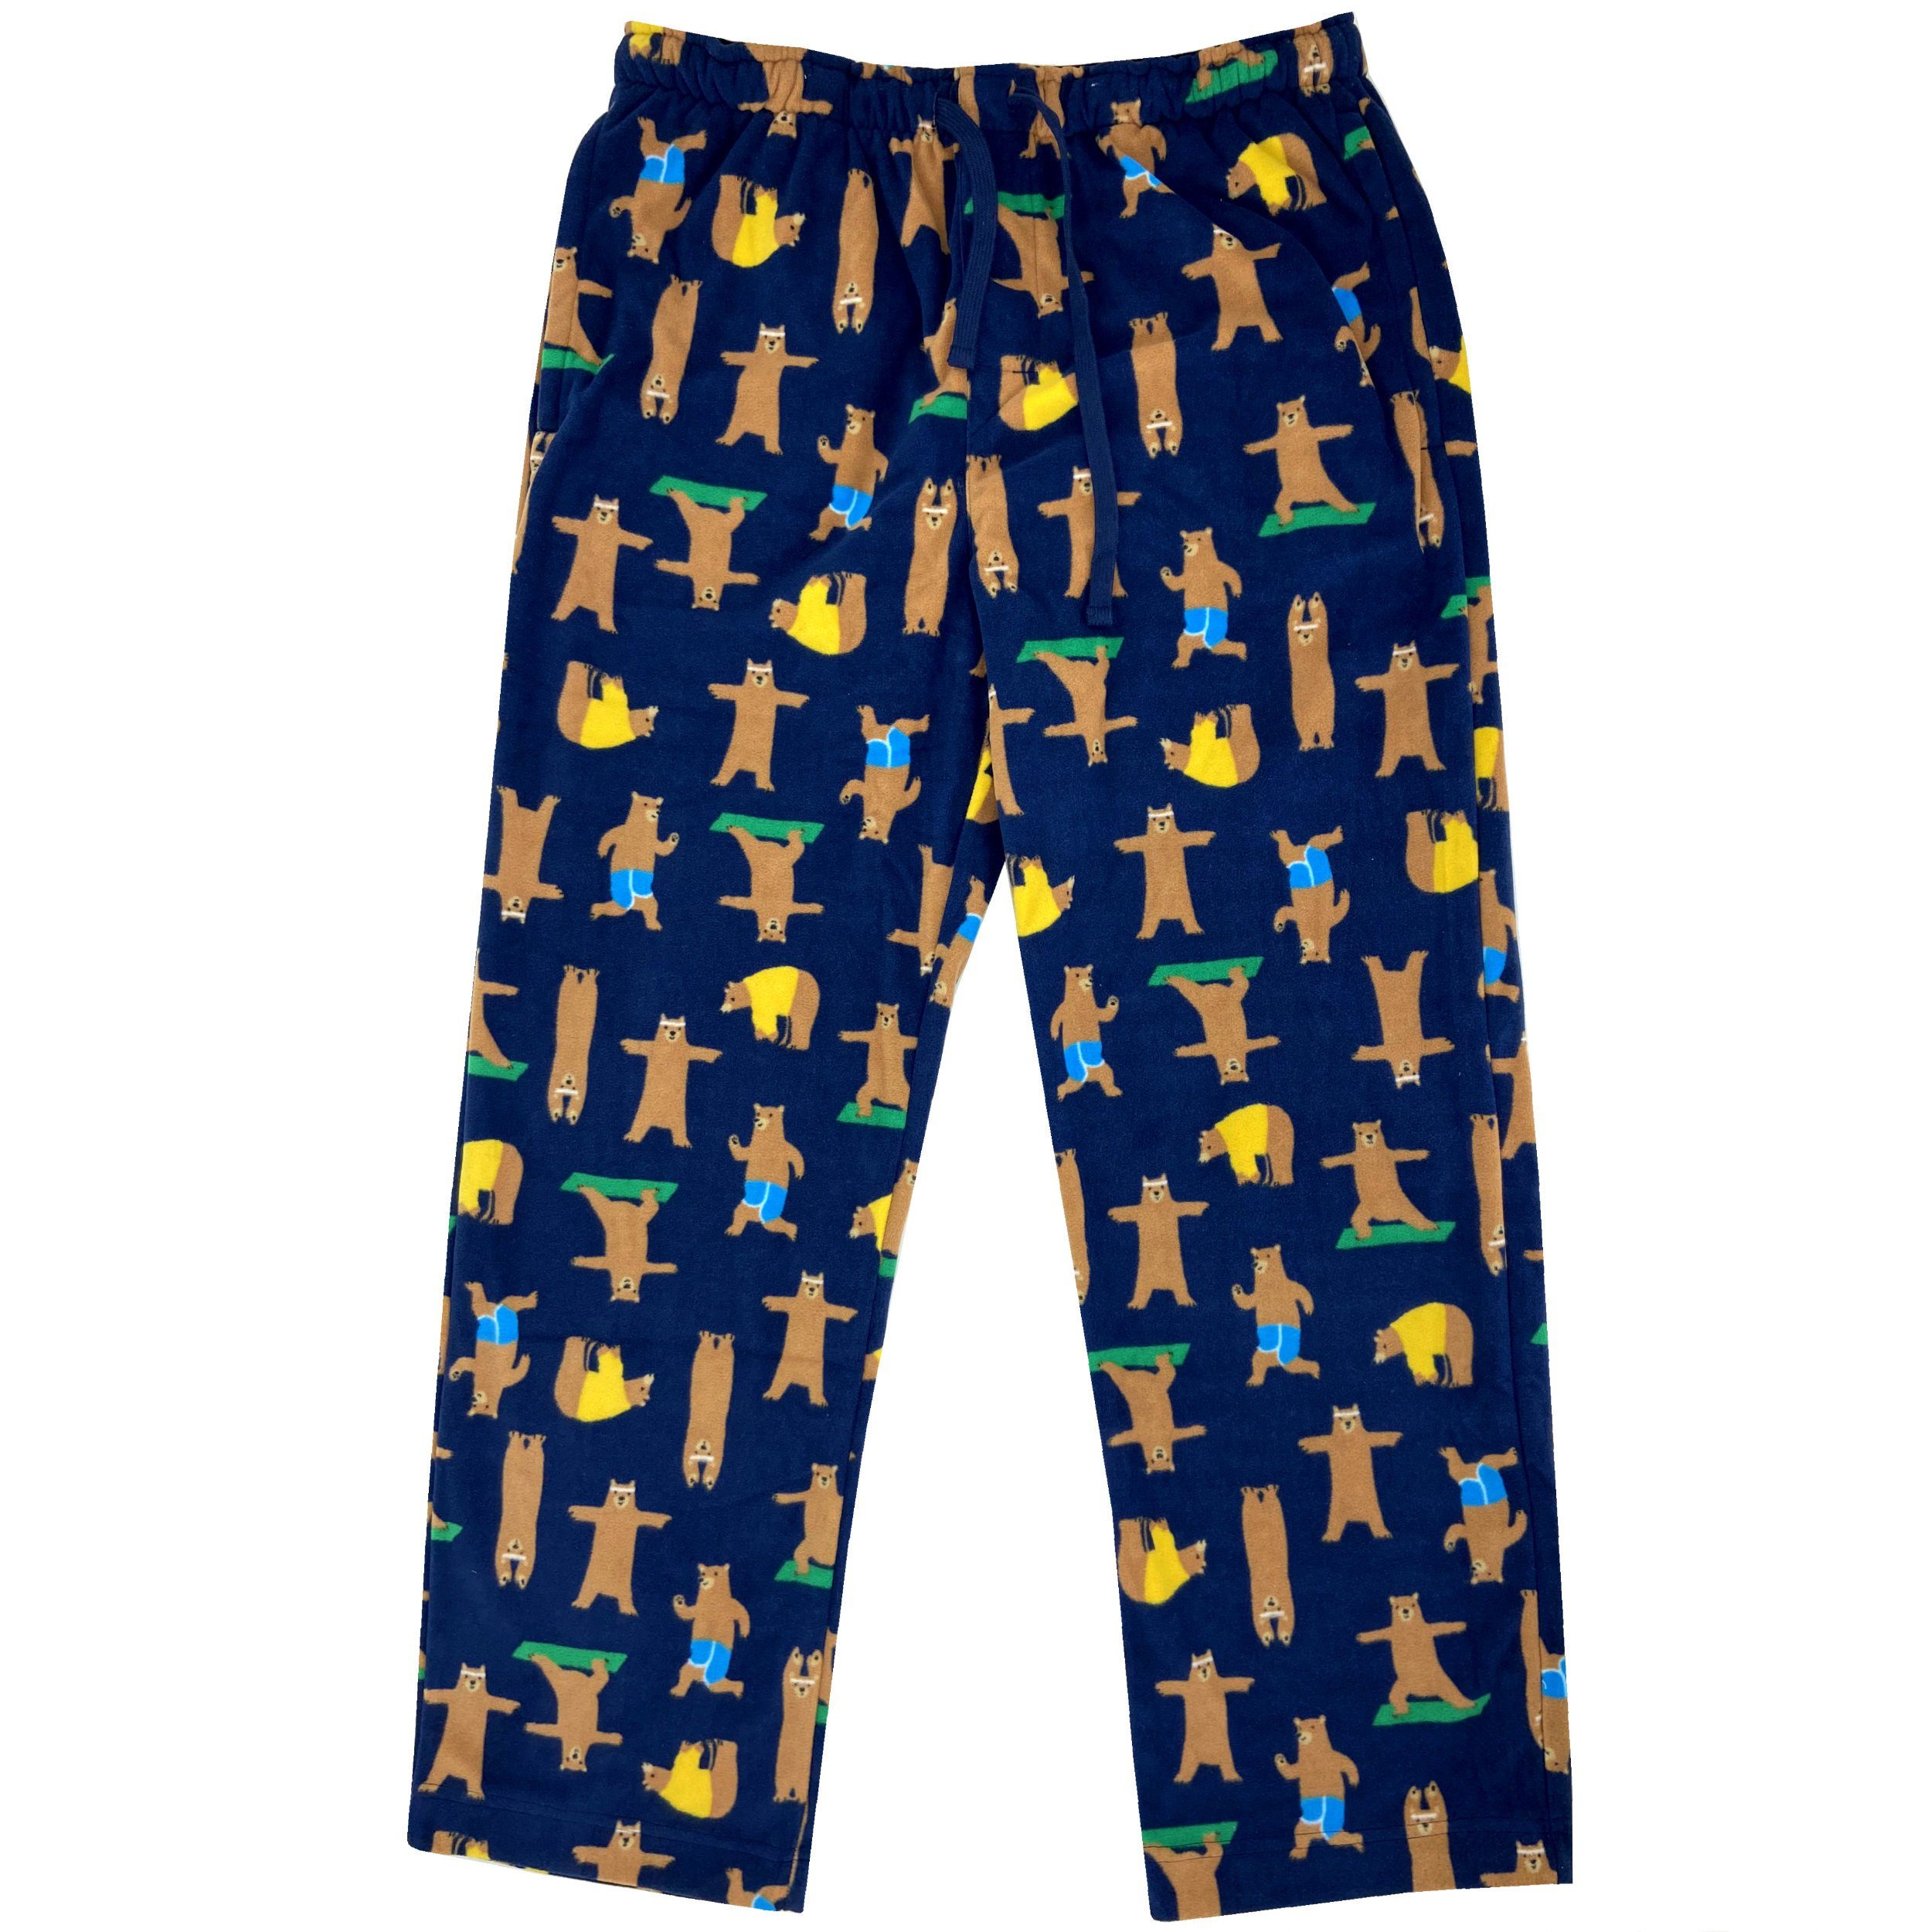 Men's Soft Fleece Long Pajama Pants Bottoms with Yoga Brown Bear Pattern